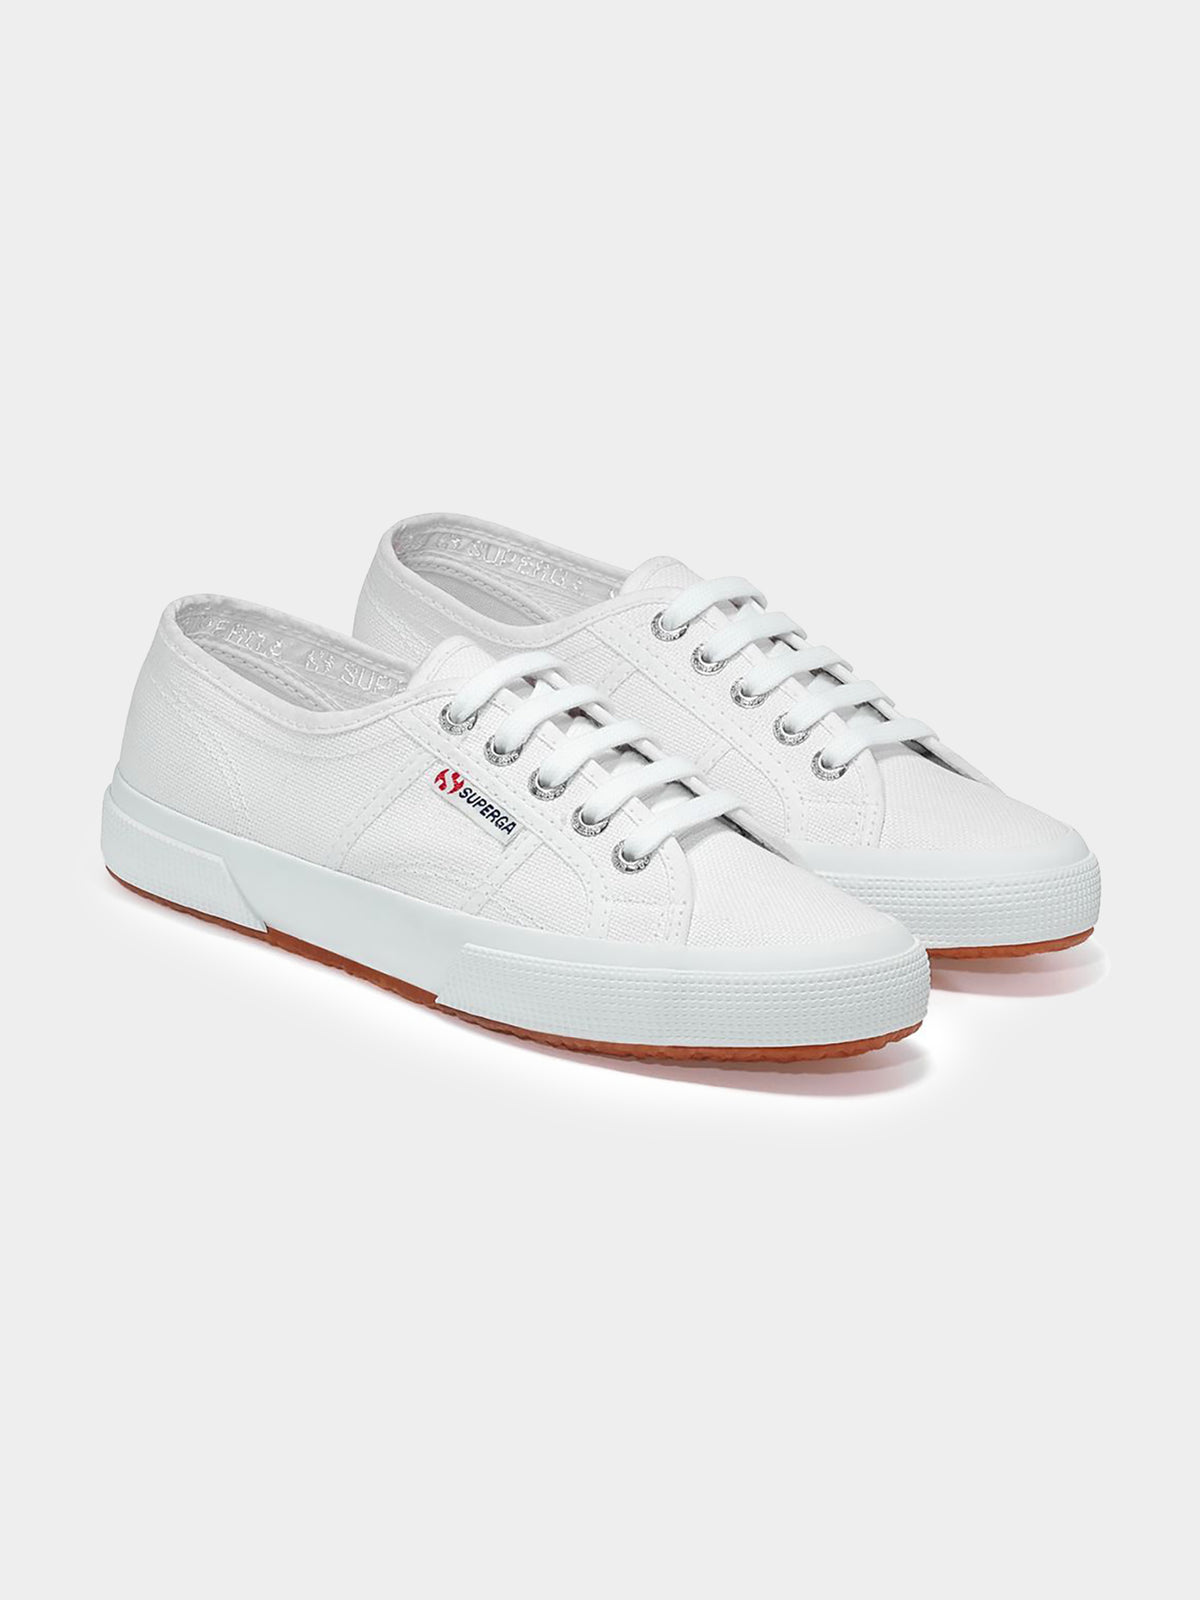 Unisex 2750 Cotu Classic Sneaker in White Canvas